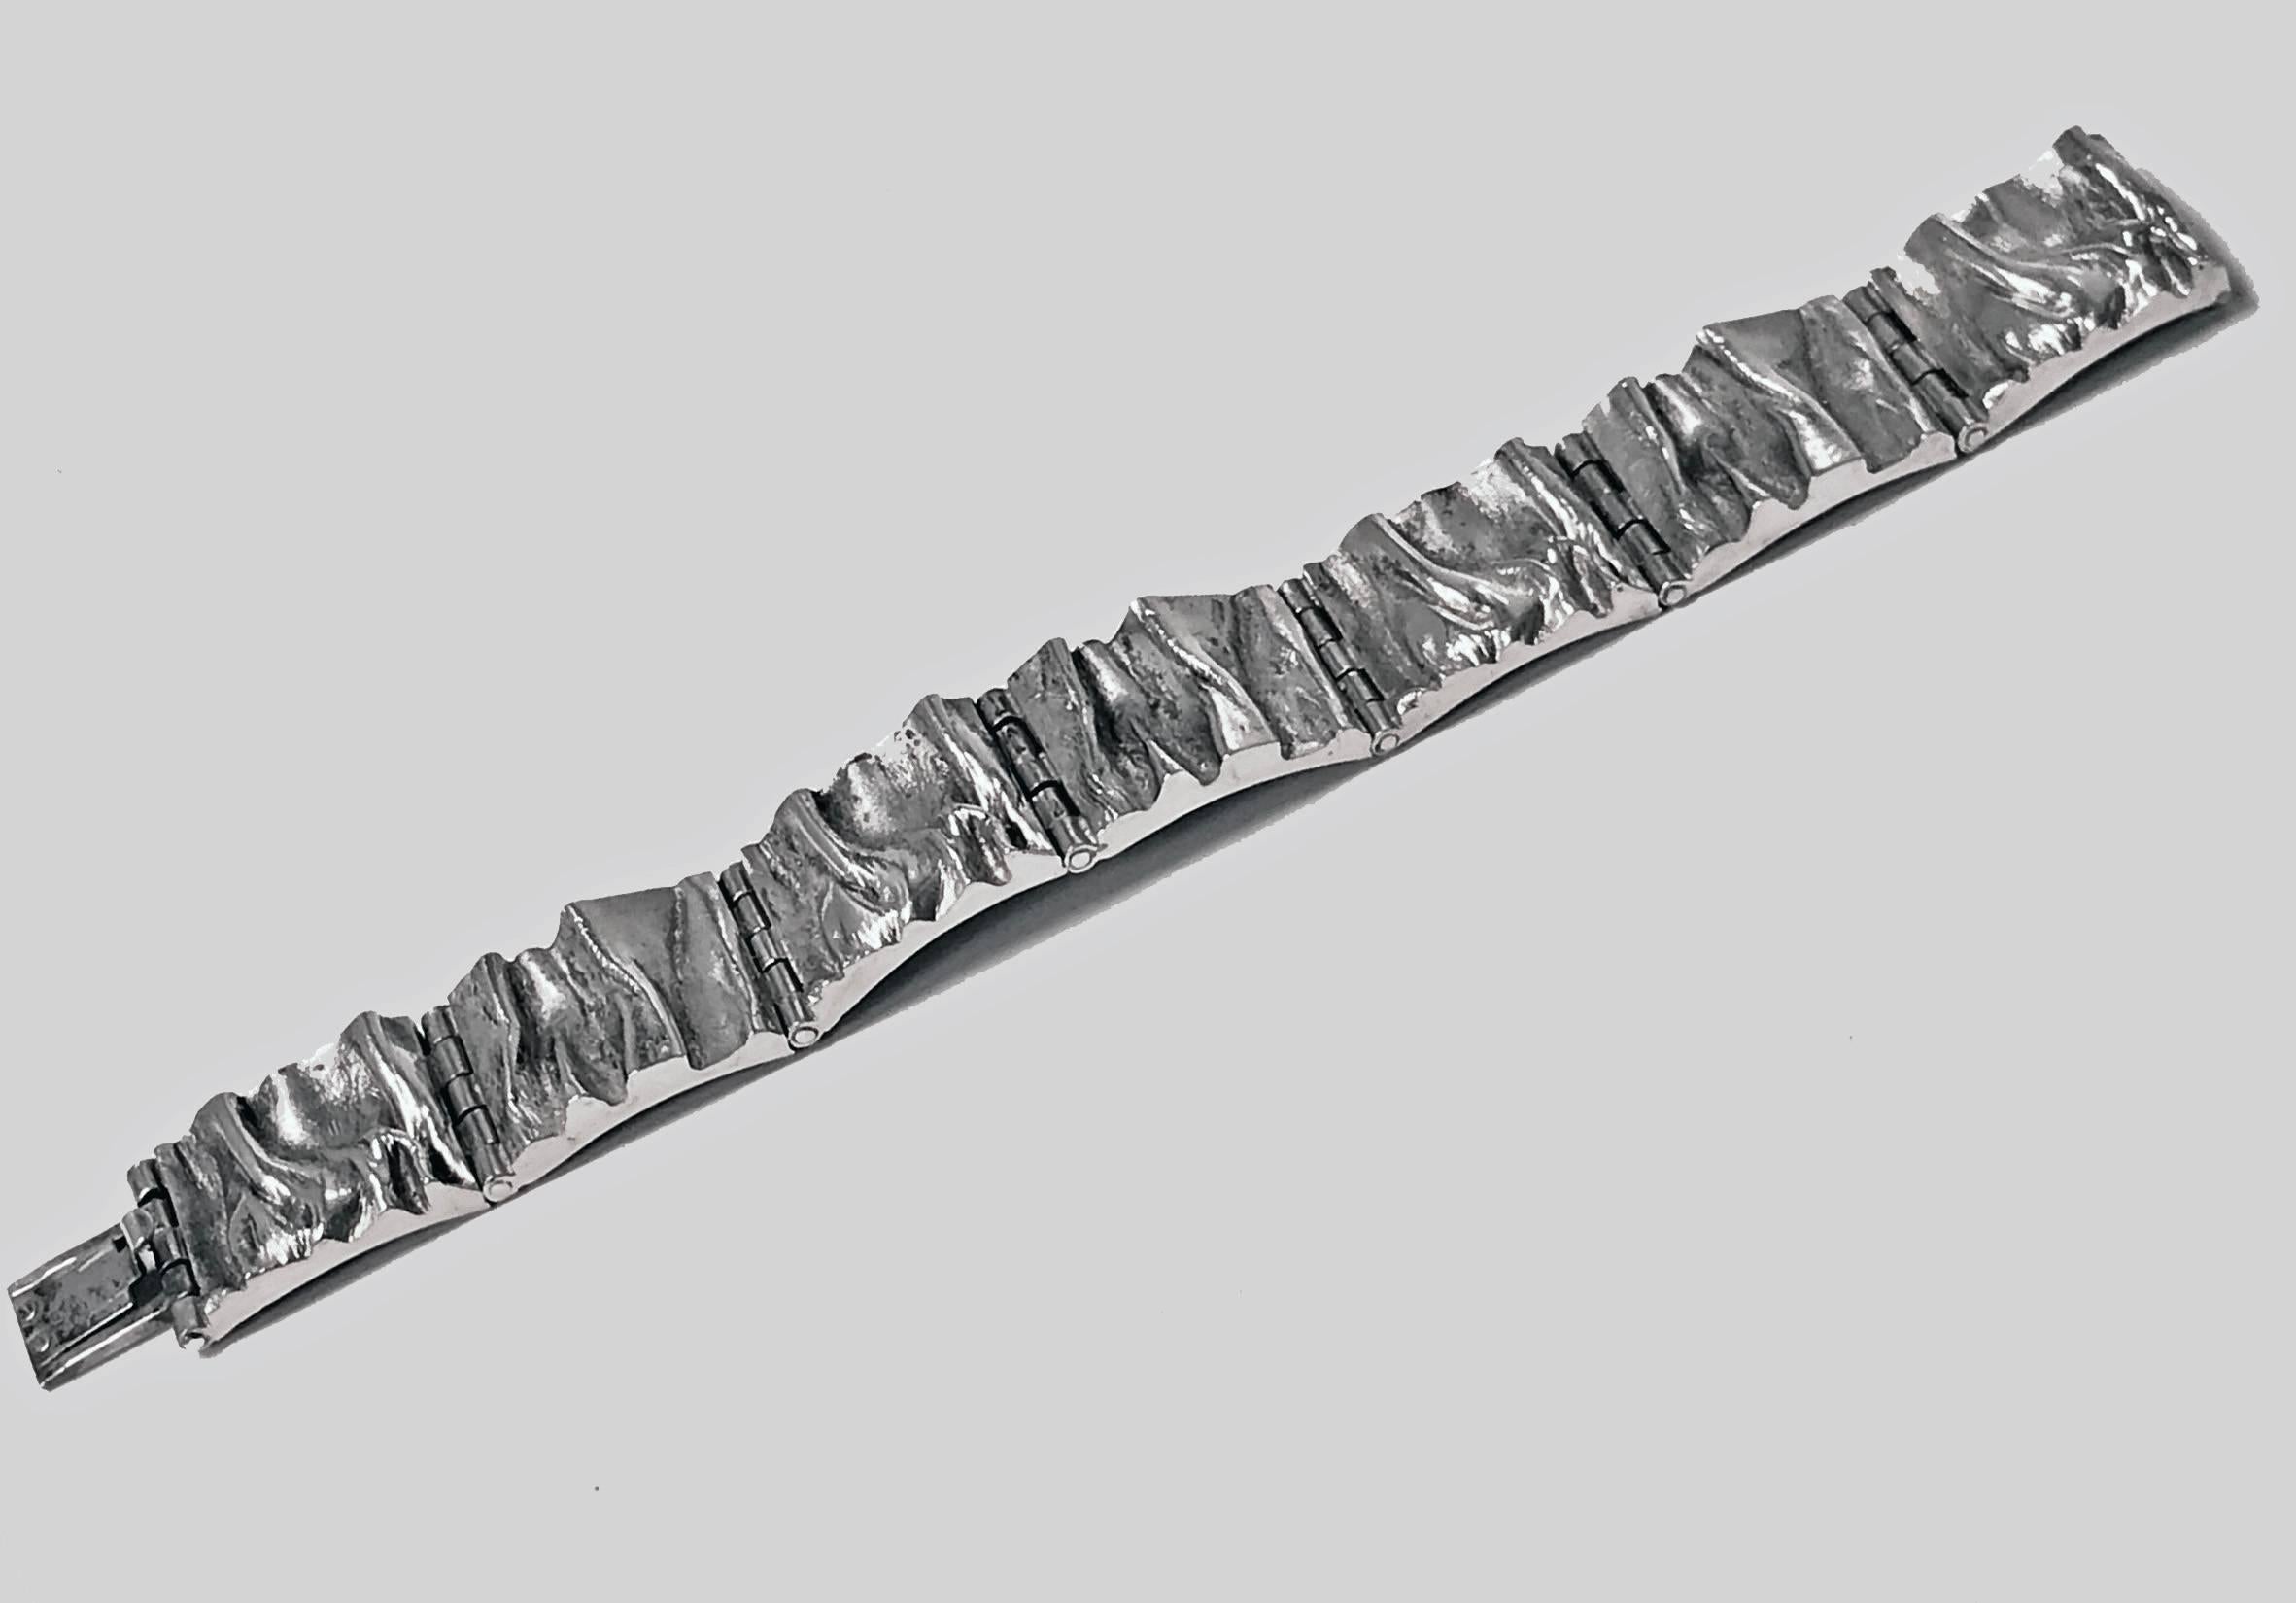 Scandinavian Silver Bracelet, Matti J. Hyvarinen of Sirokoru, Finland 1973, English import marks. The handmade hinged bracelet of organic design textured links. Fully hallmarked. Length: 7 inches. Weight: 49.96 grams.